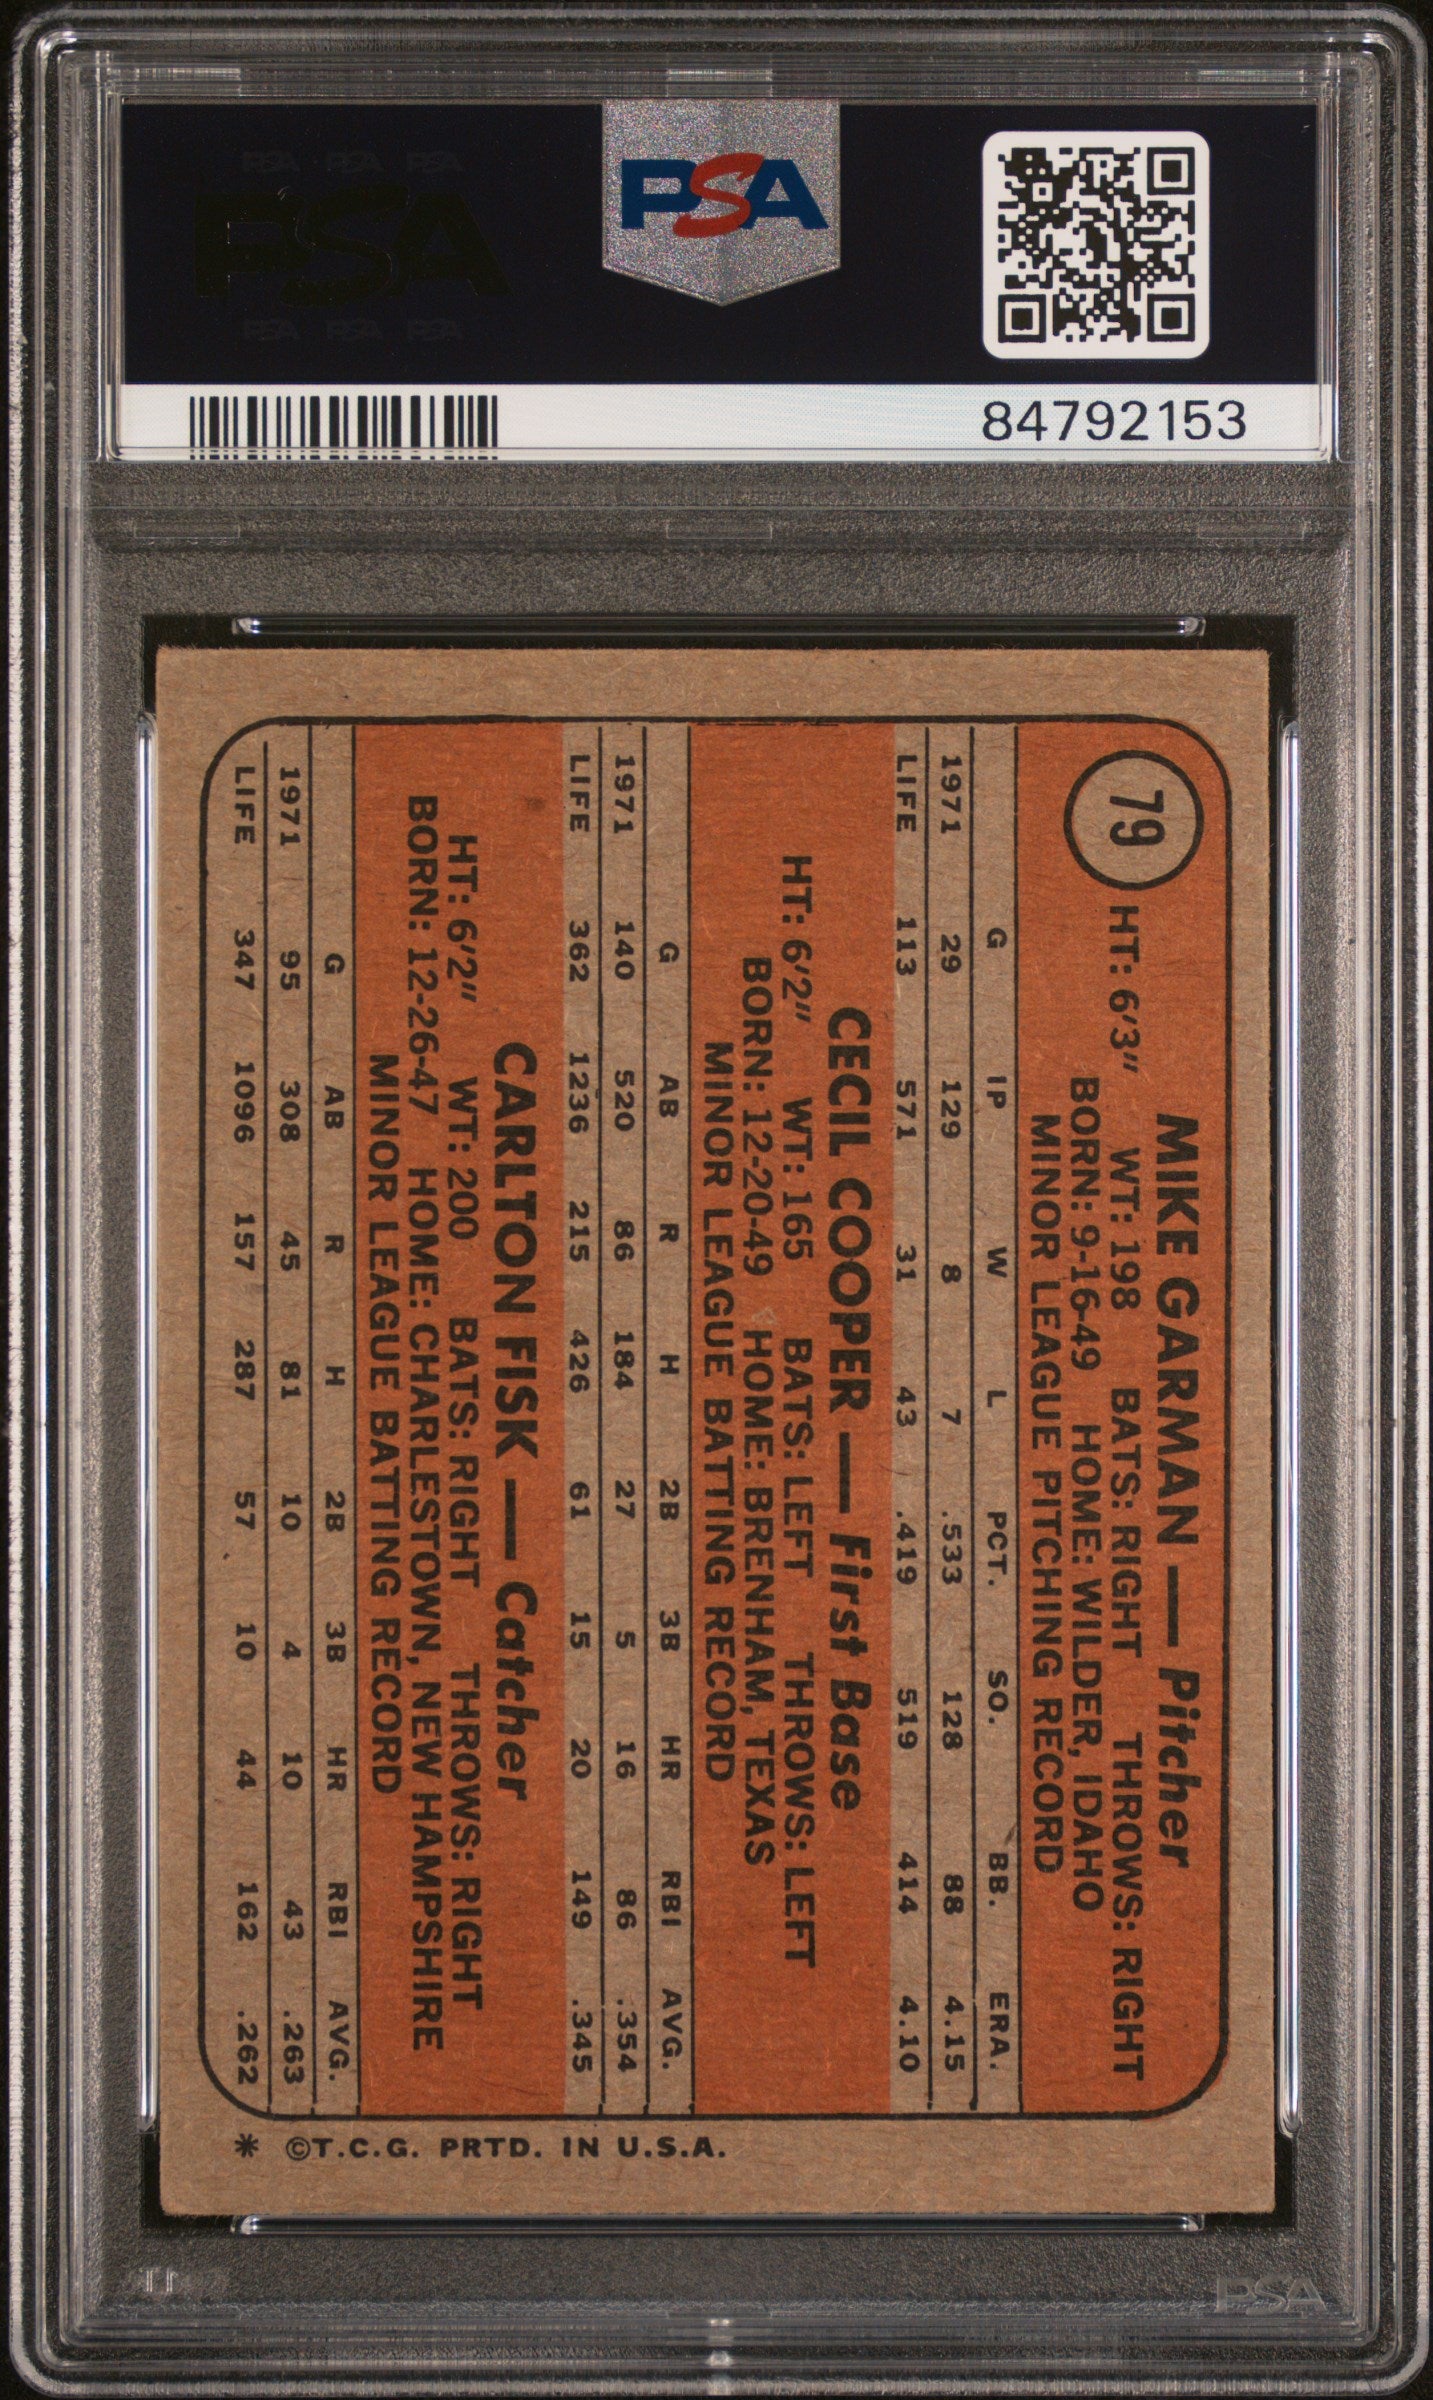 1972 Topps #79 Carlton Fisk Red Sox Rookies / PSA 5 / C2153